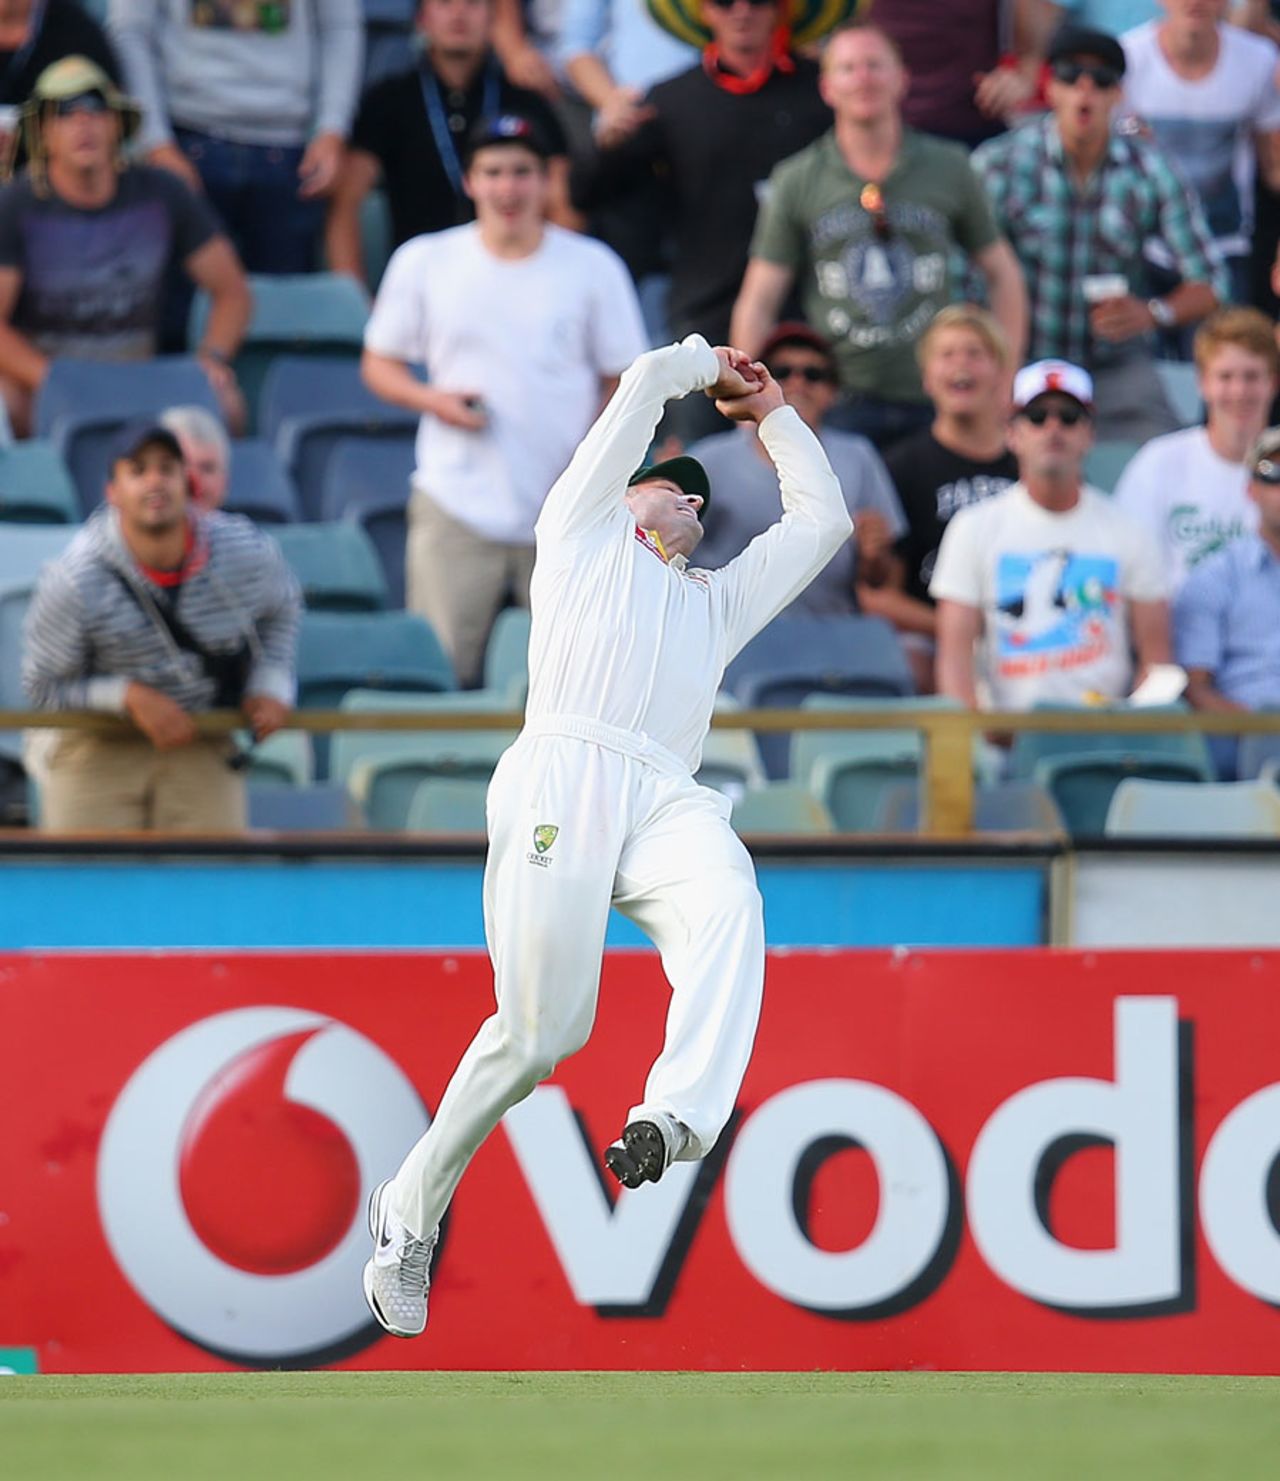 Michael Hussey leaps backward to catch Vernon Philander, Australia v South Africa, 3rd Test, Perth, 1st day, November 30, 2012